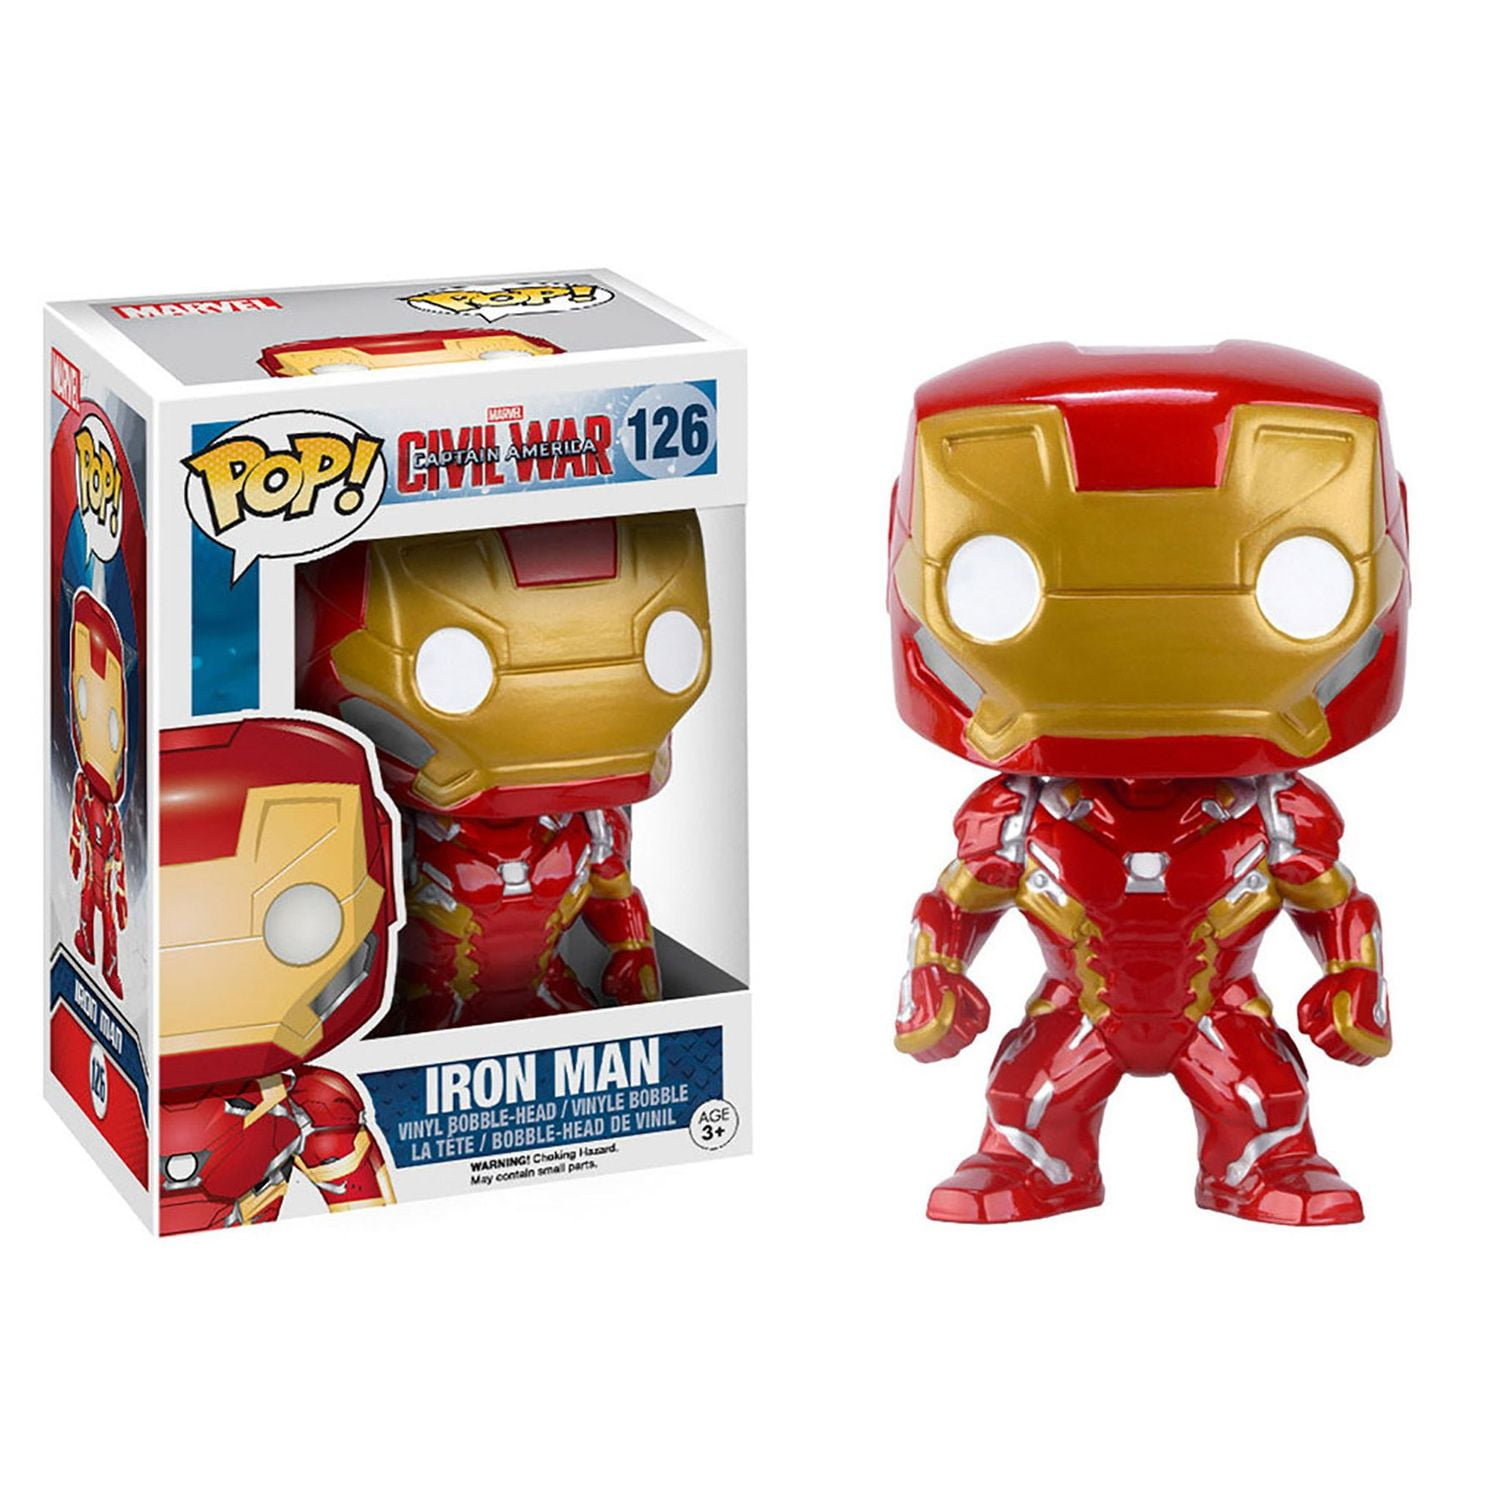 Official Marvels Avengers Game Iron Man Captain America Funko Pop Vinyl Figures 